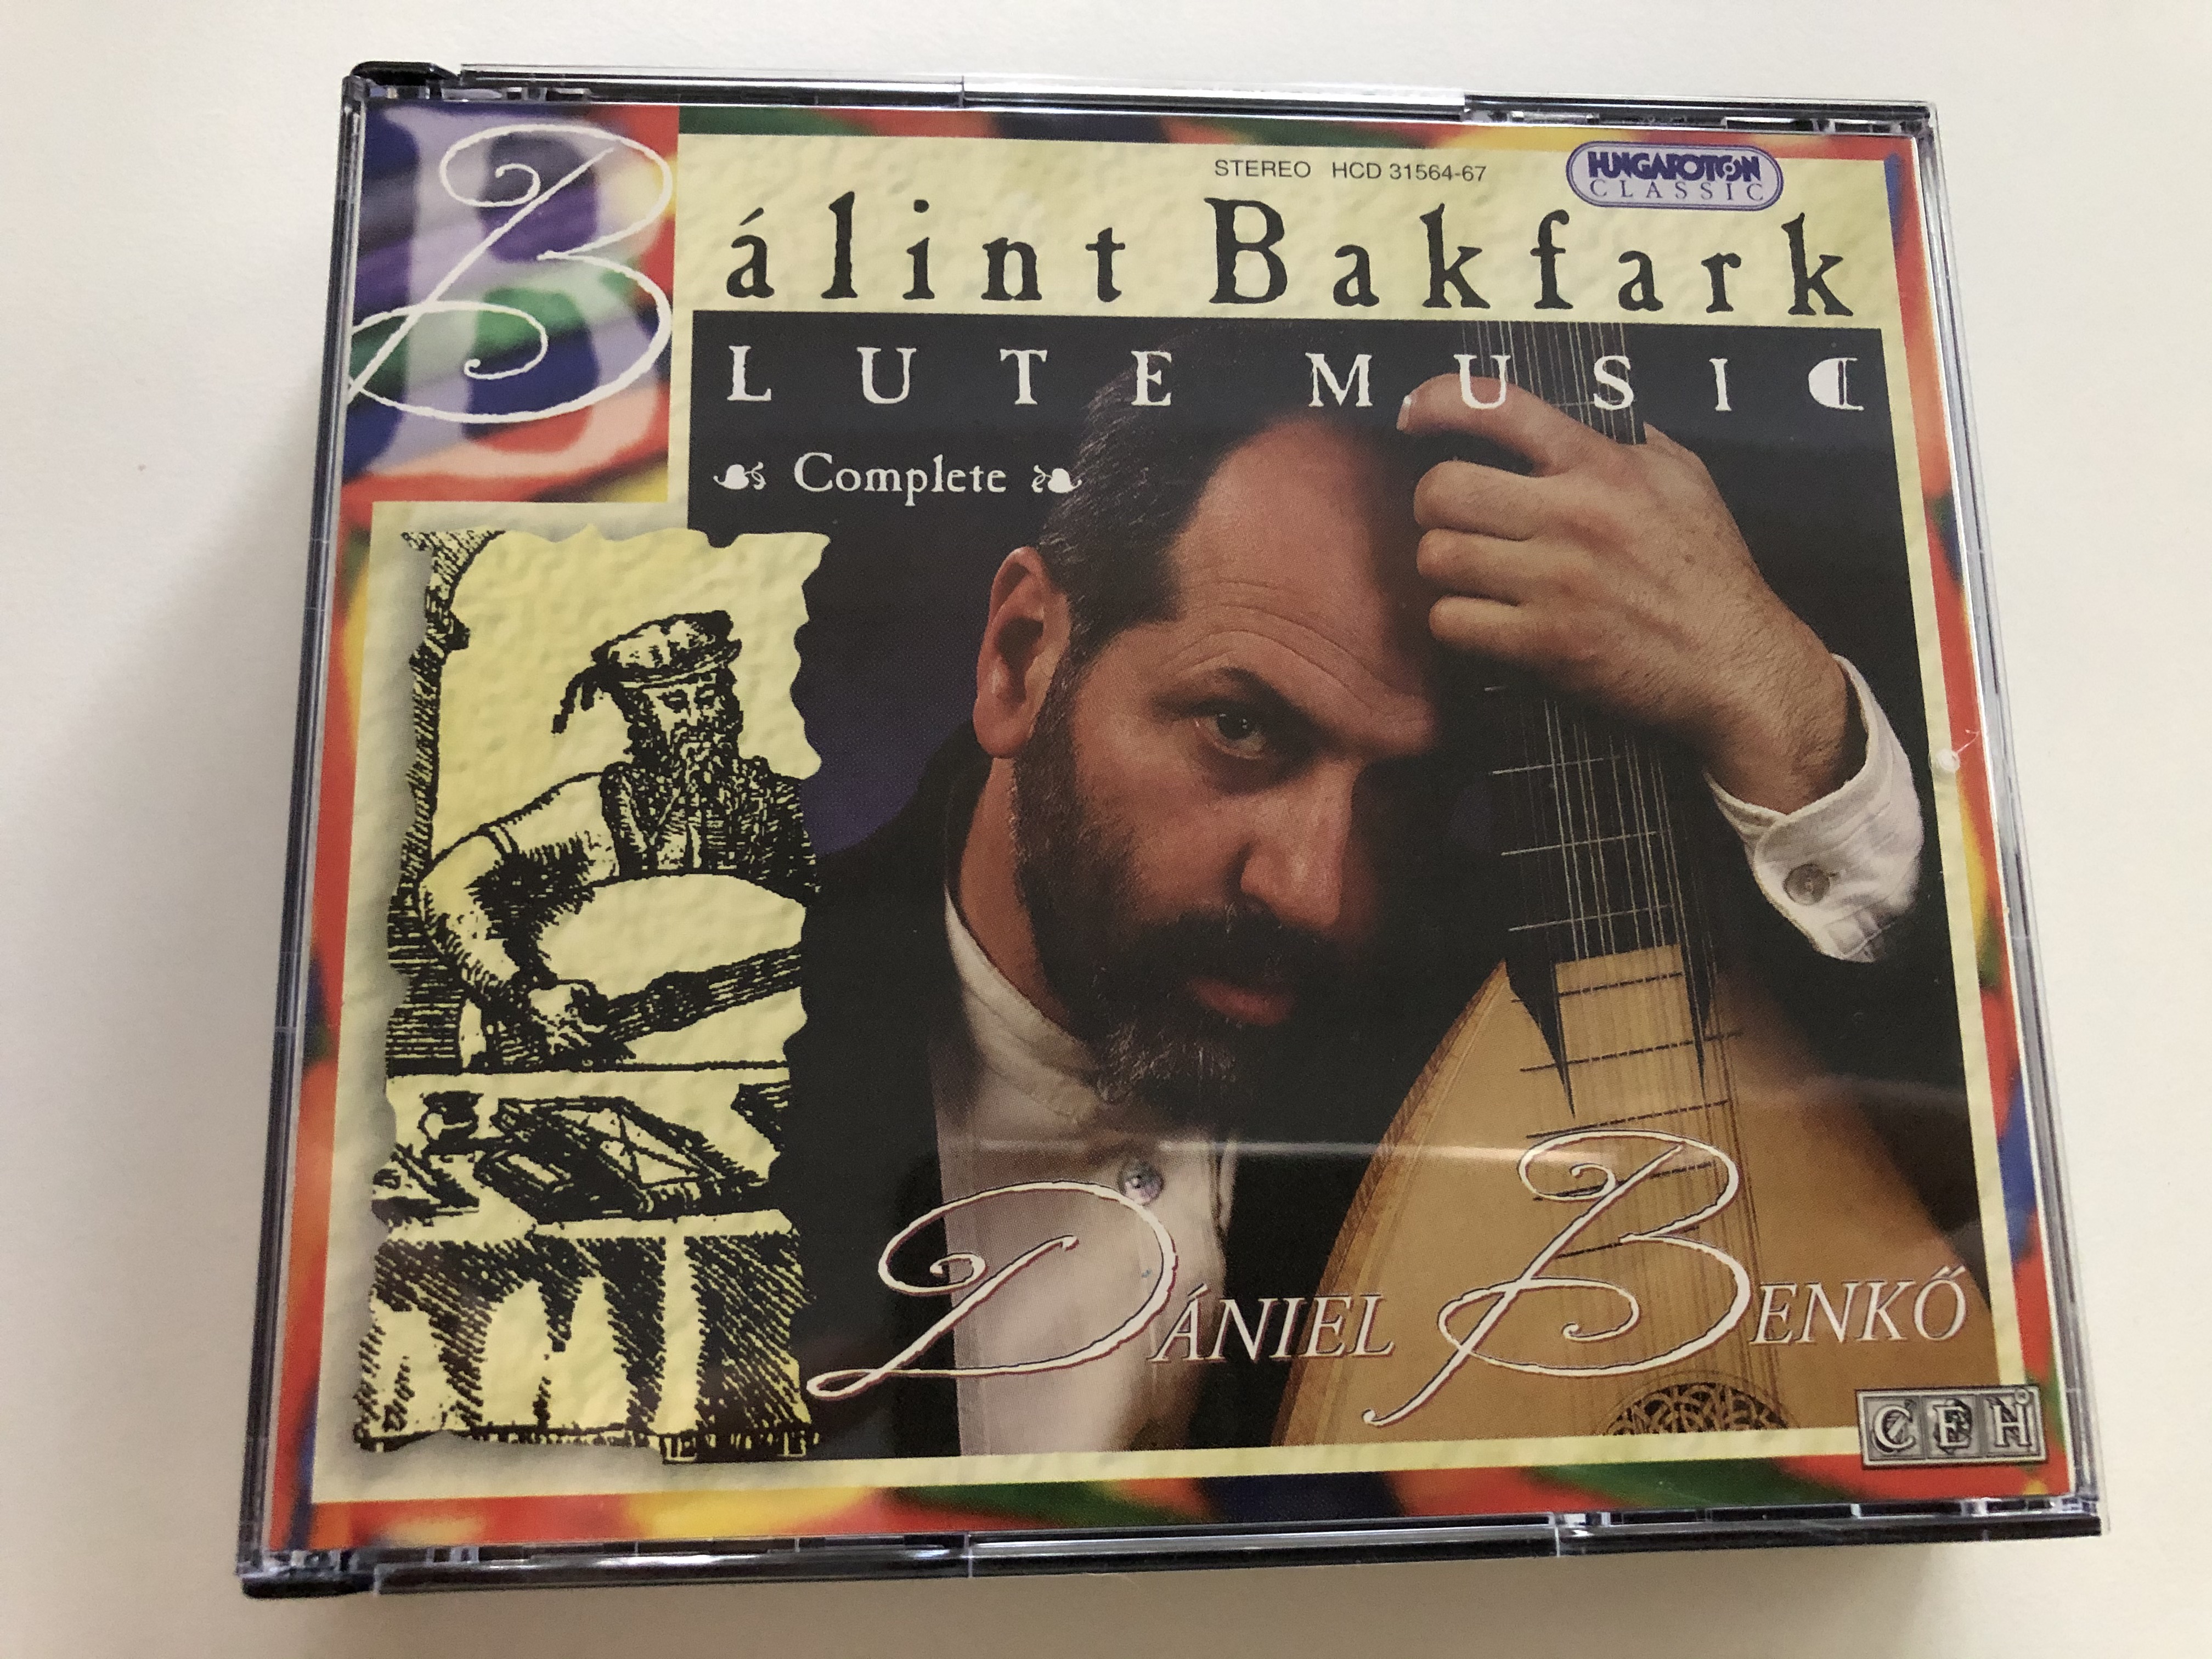 balint-bakfark-lute-music-complete-daniel-benko-hungaroton-classic-4x-audio-cd-1986-stereo-hcd-31564-67-1-.jpg